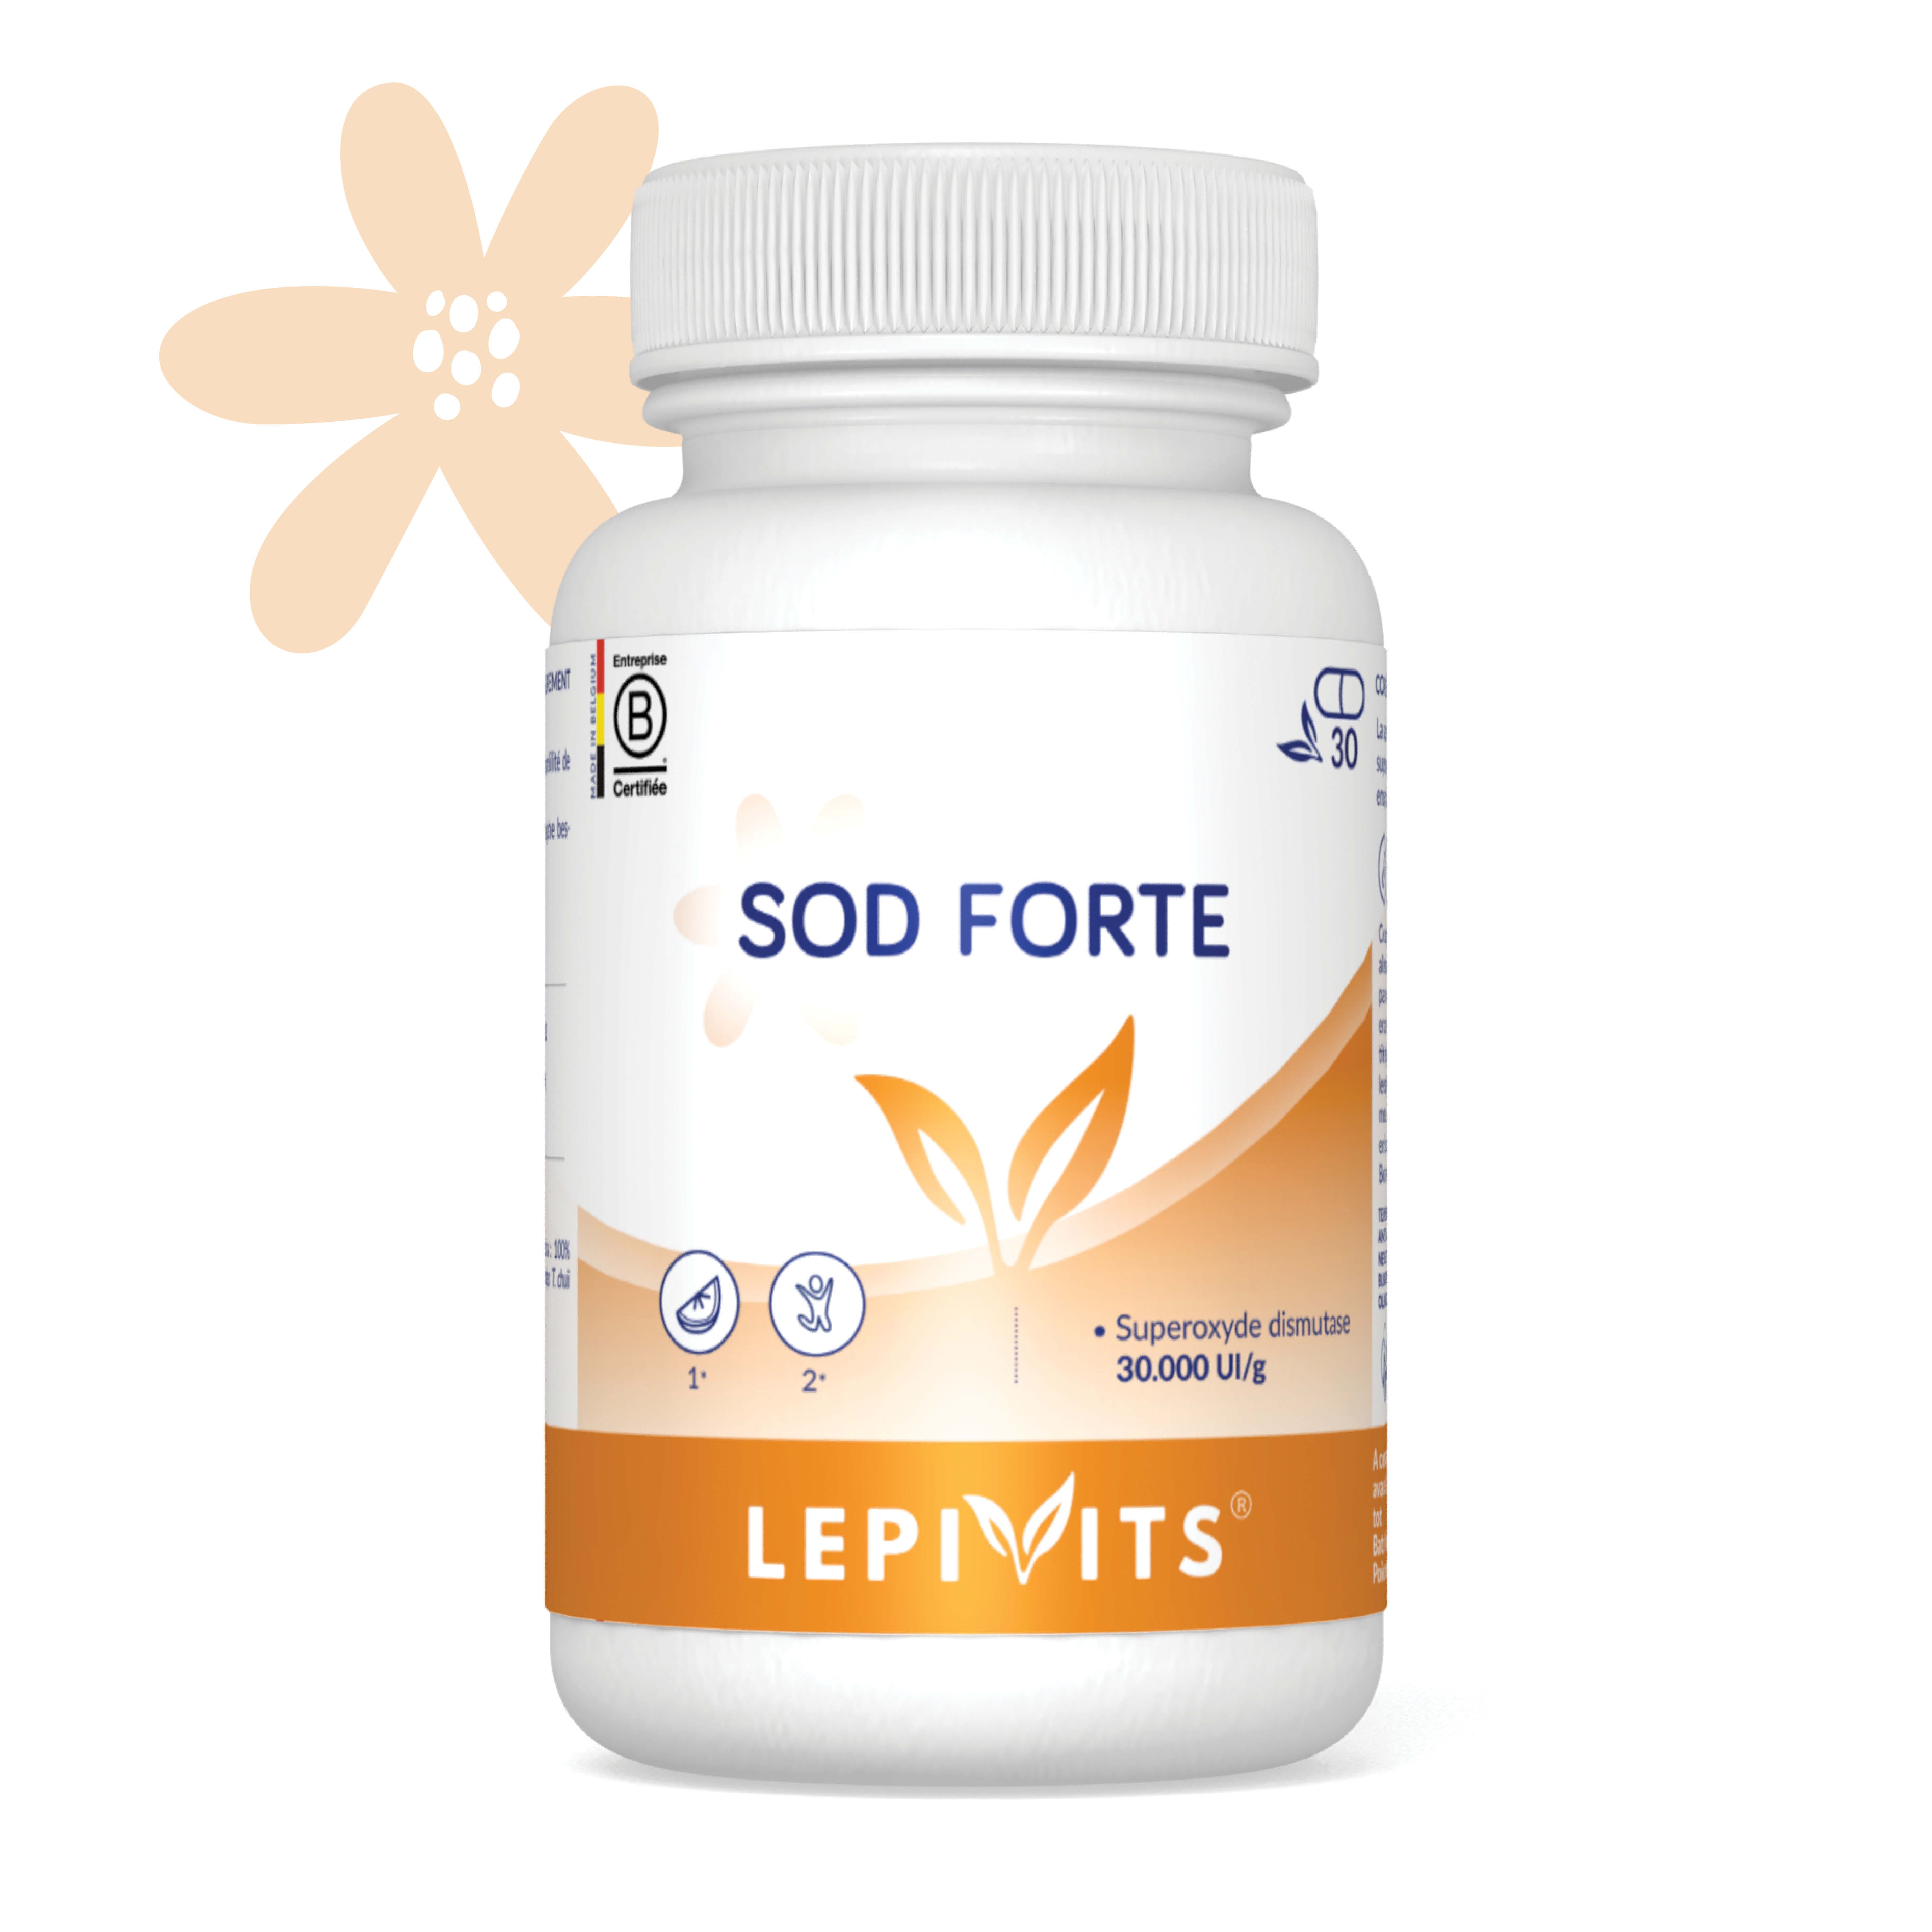 Lepivits_SOD Forte